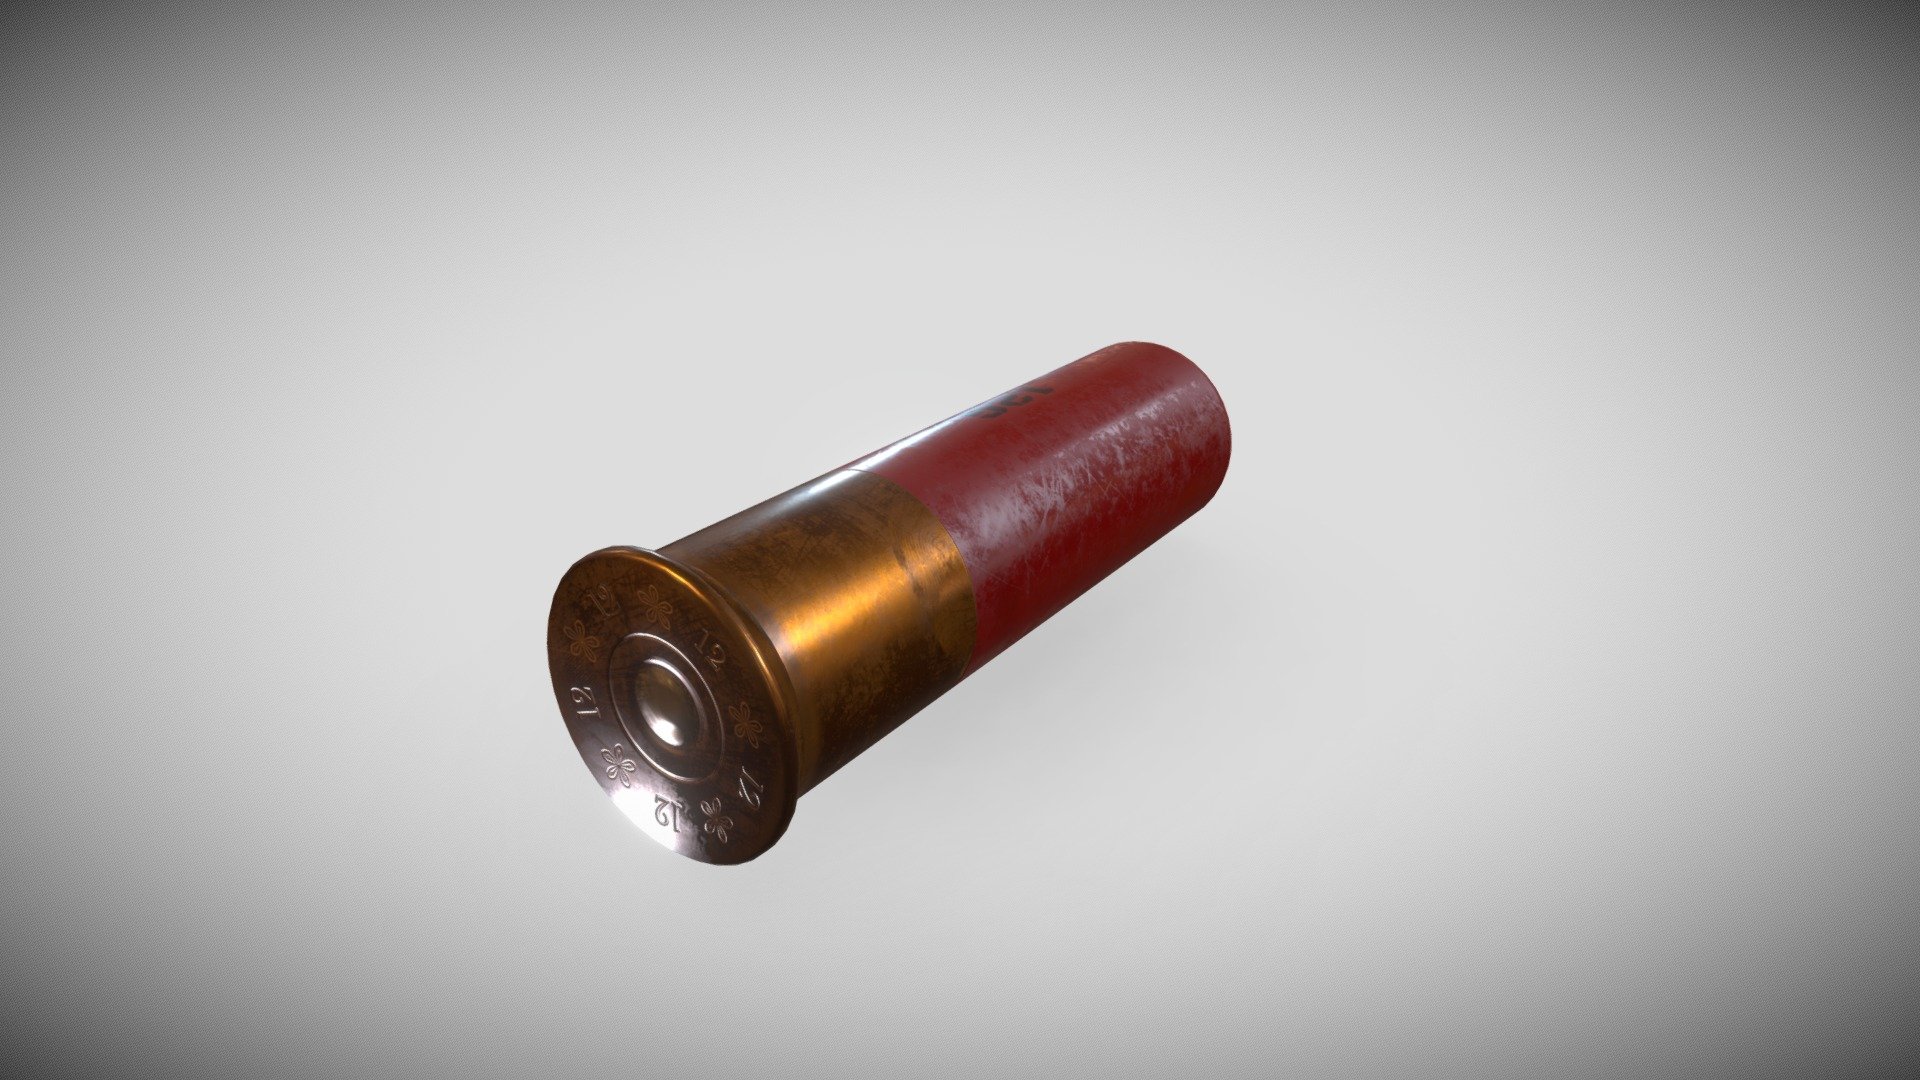 12 Gauge Classic Shotgun Shell - shotgun shell - Buy Royalty Free 3D model by theunclerulez (@f.zimbaldi) 3d model